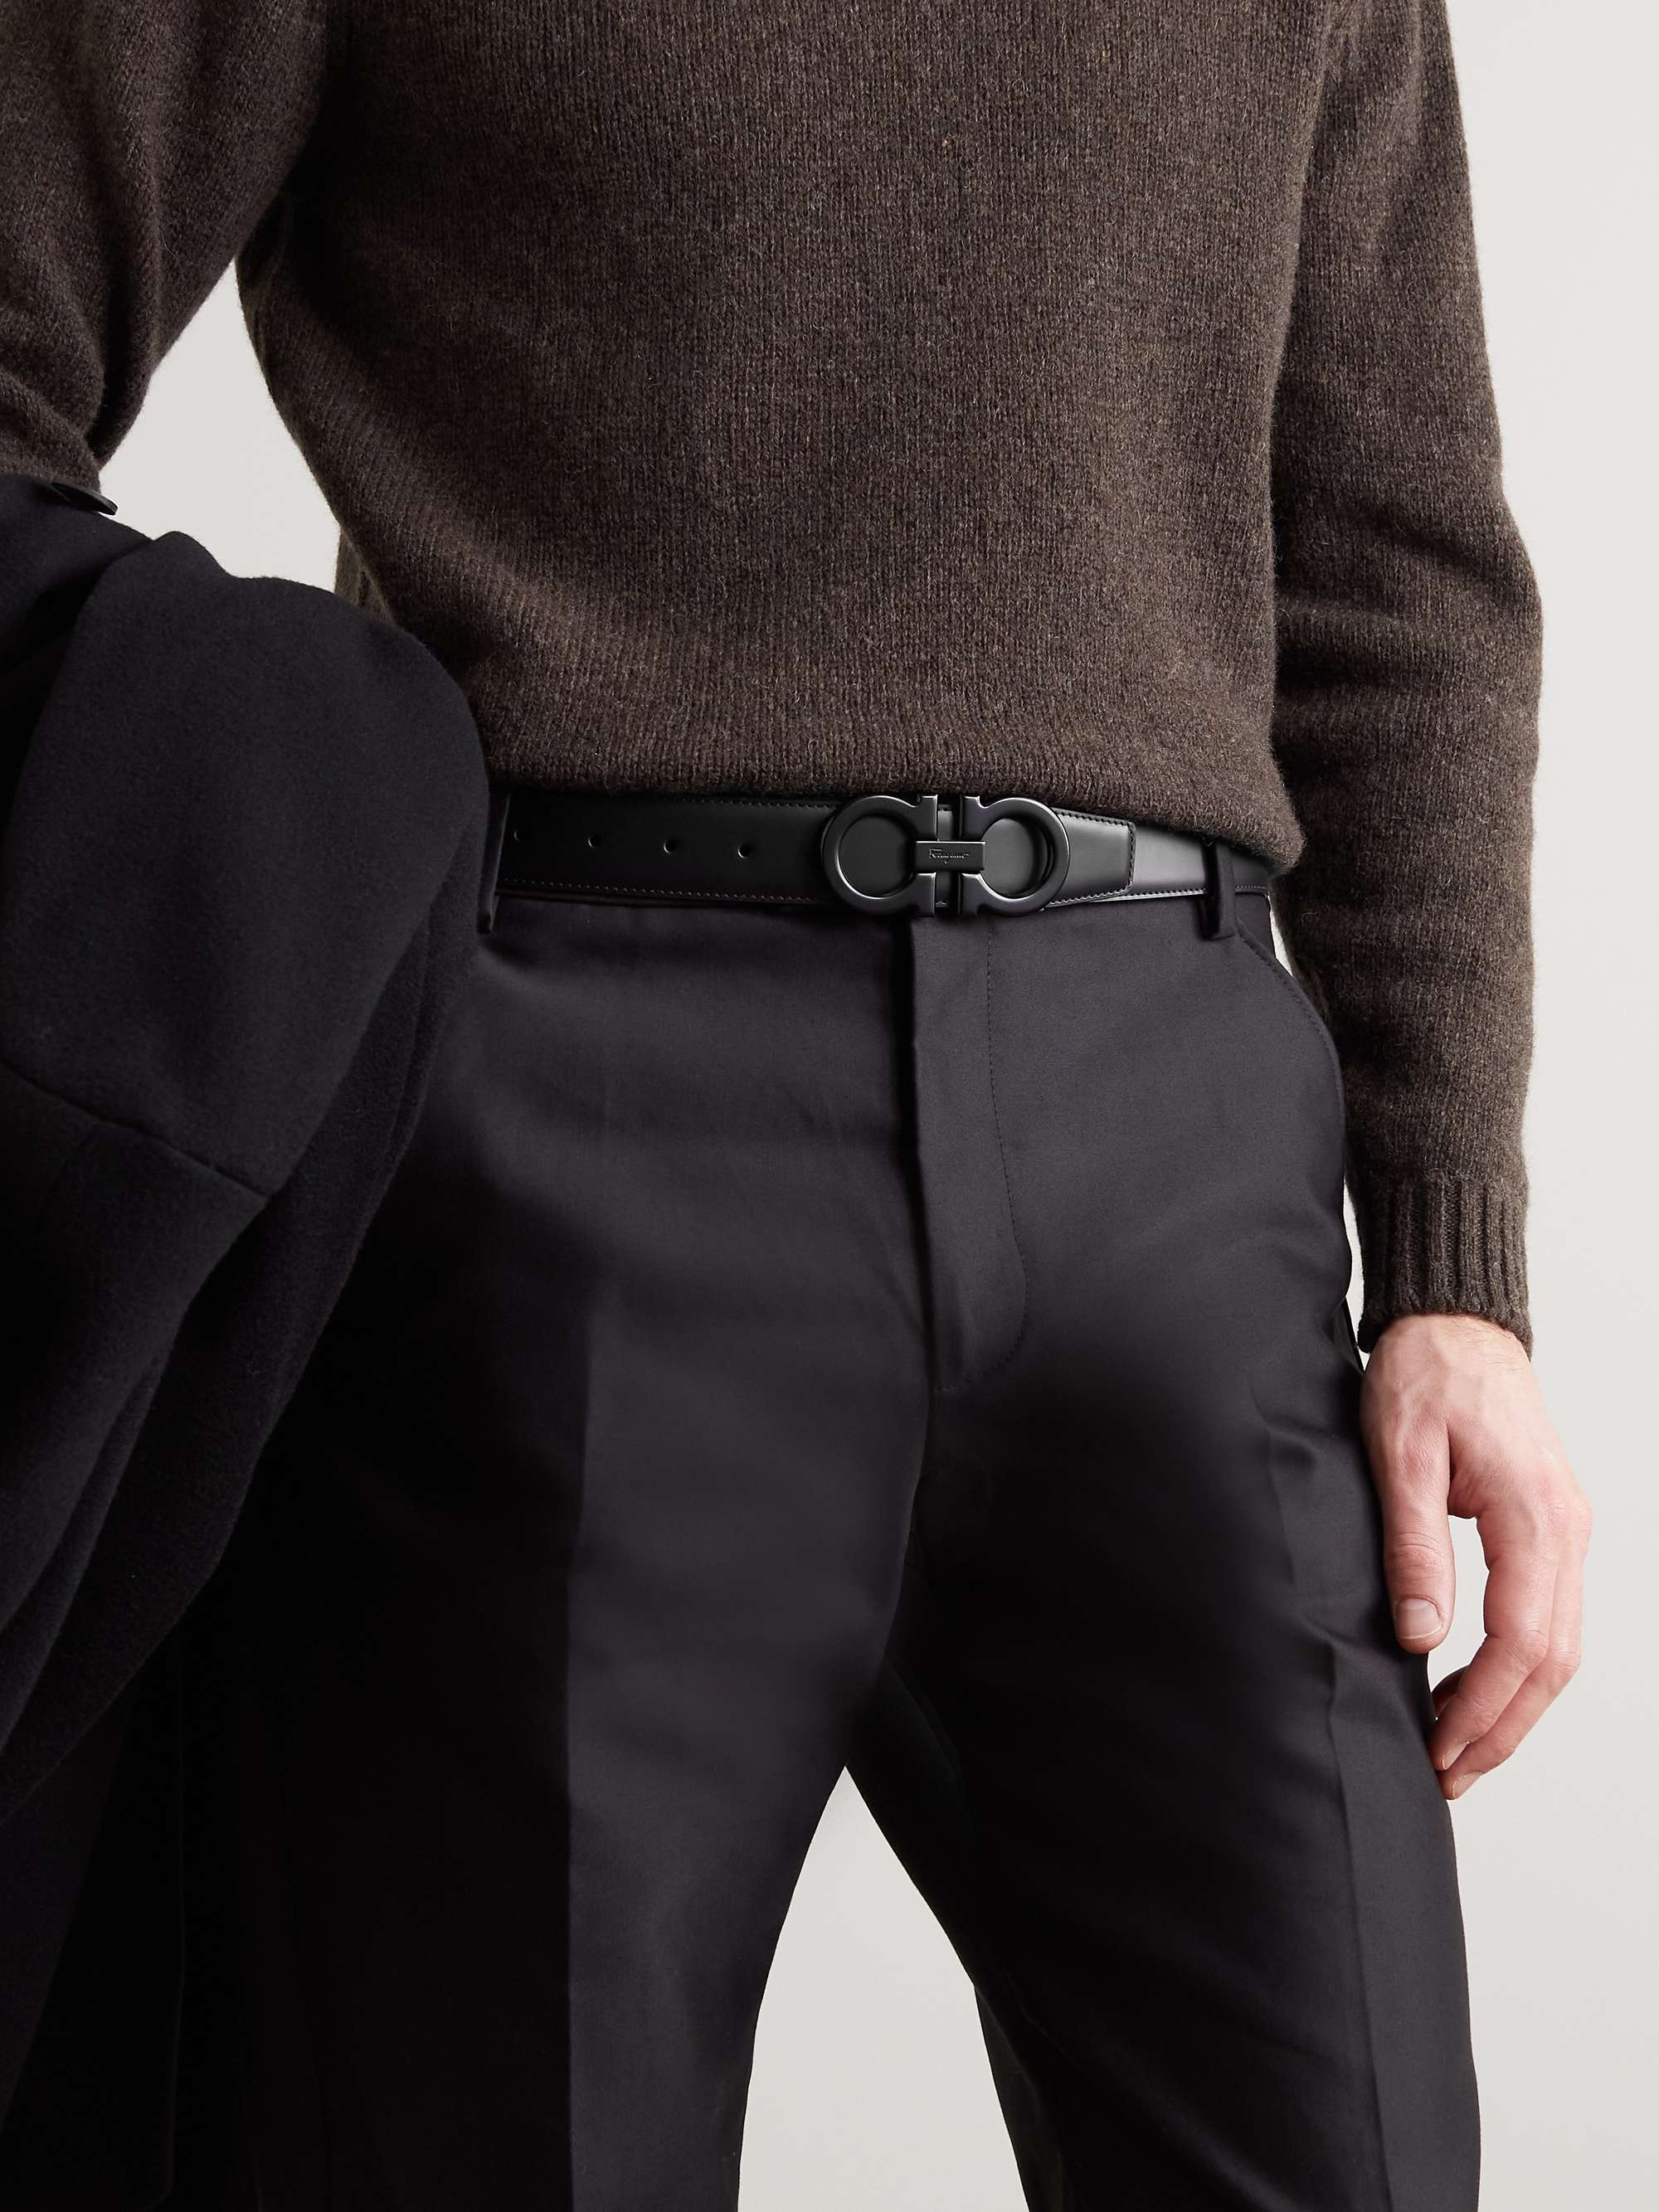 Salvatore Ferragamo Gancini Reversible & Adjustable Leather Belt